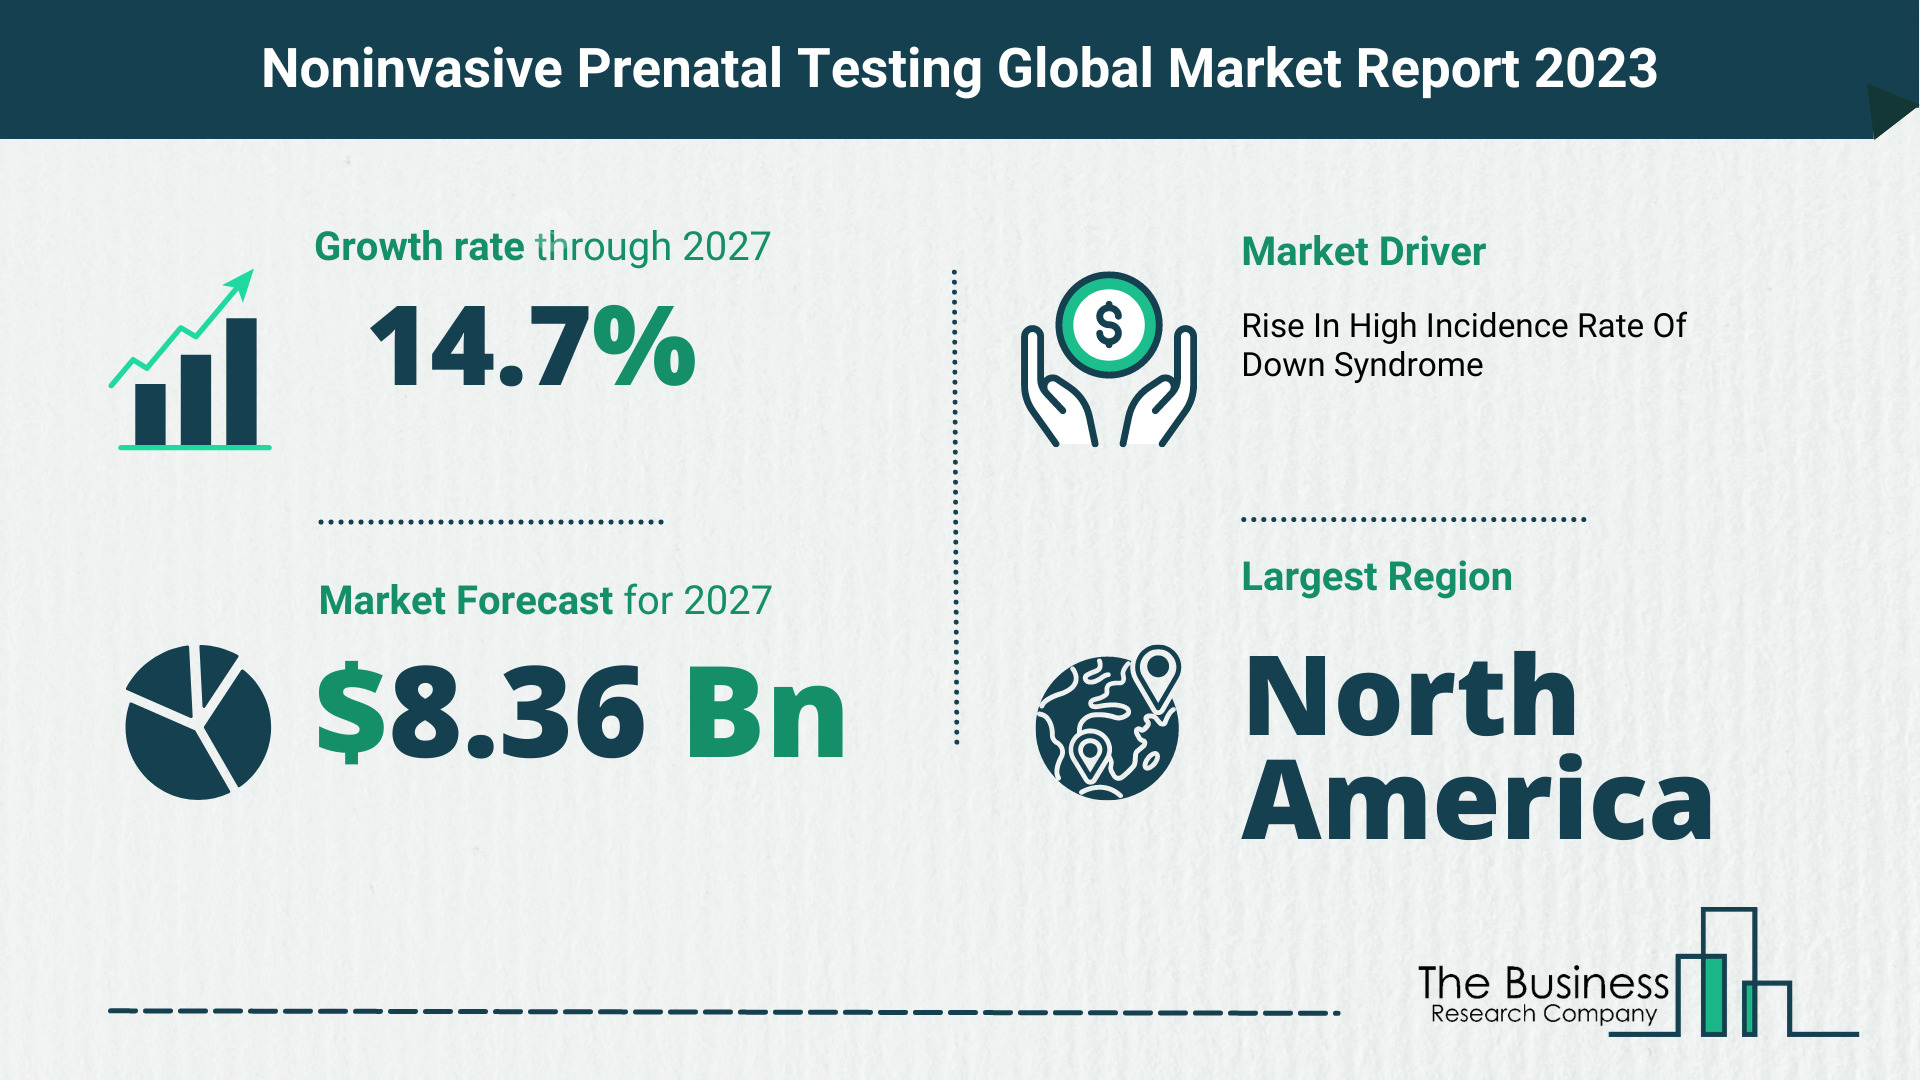 Global Noninvasive Prenatal Testing Market Opportunities And Strategies 2023